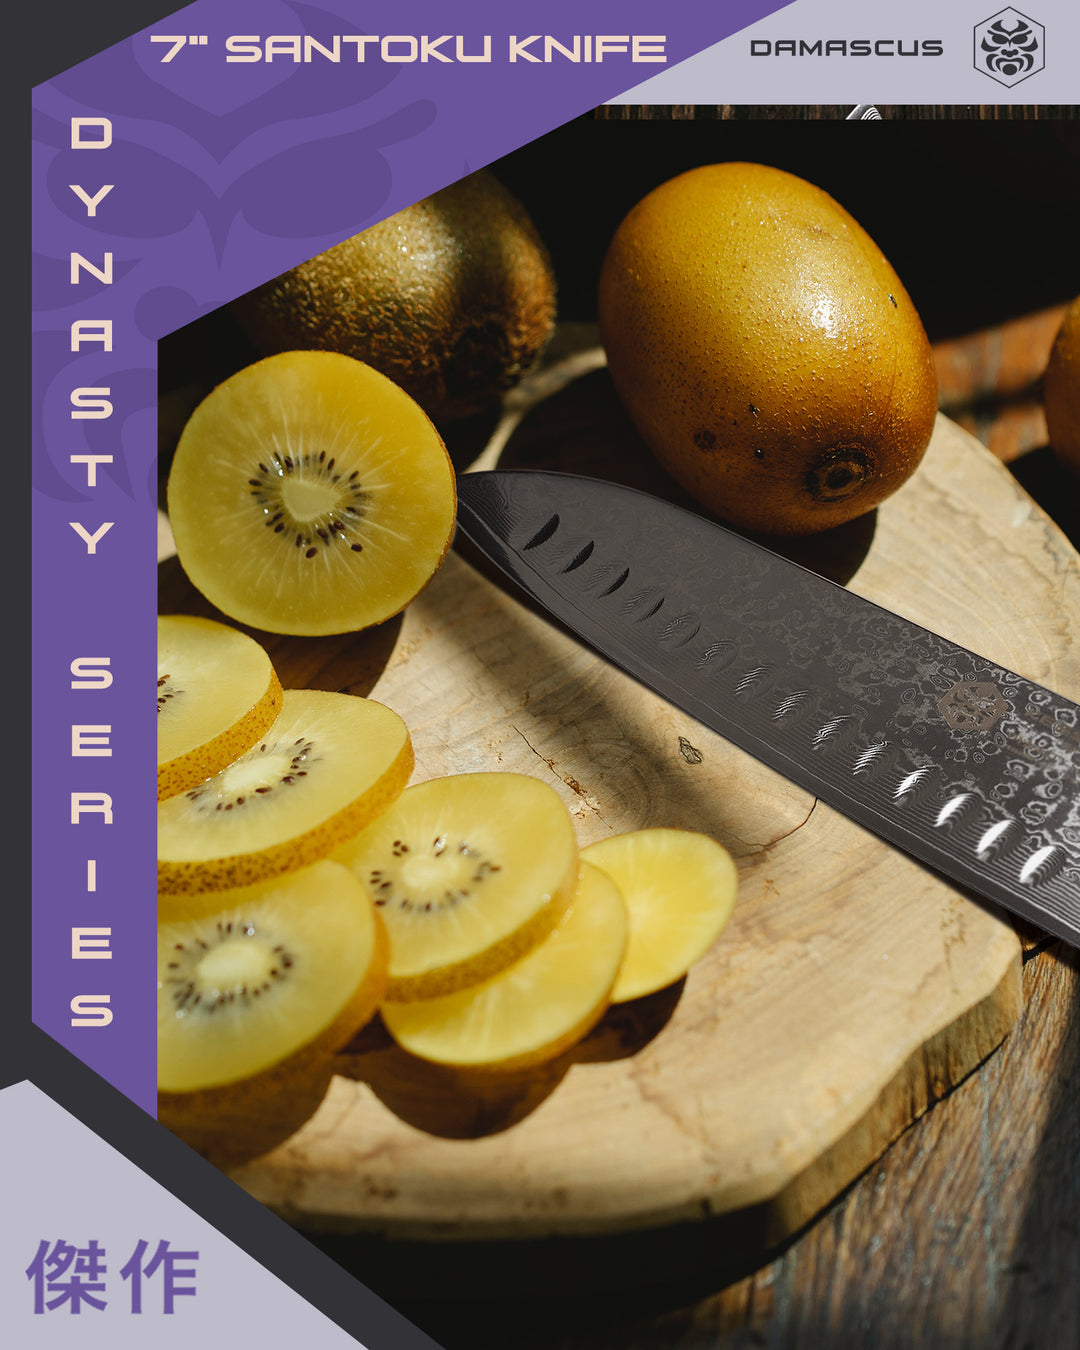 The Damascus Santoku Knife next to sliced kiwi on a cutting board